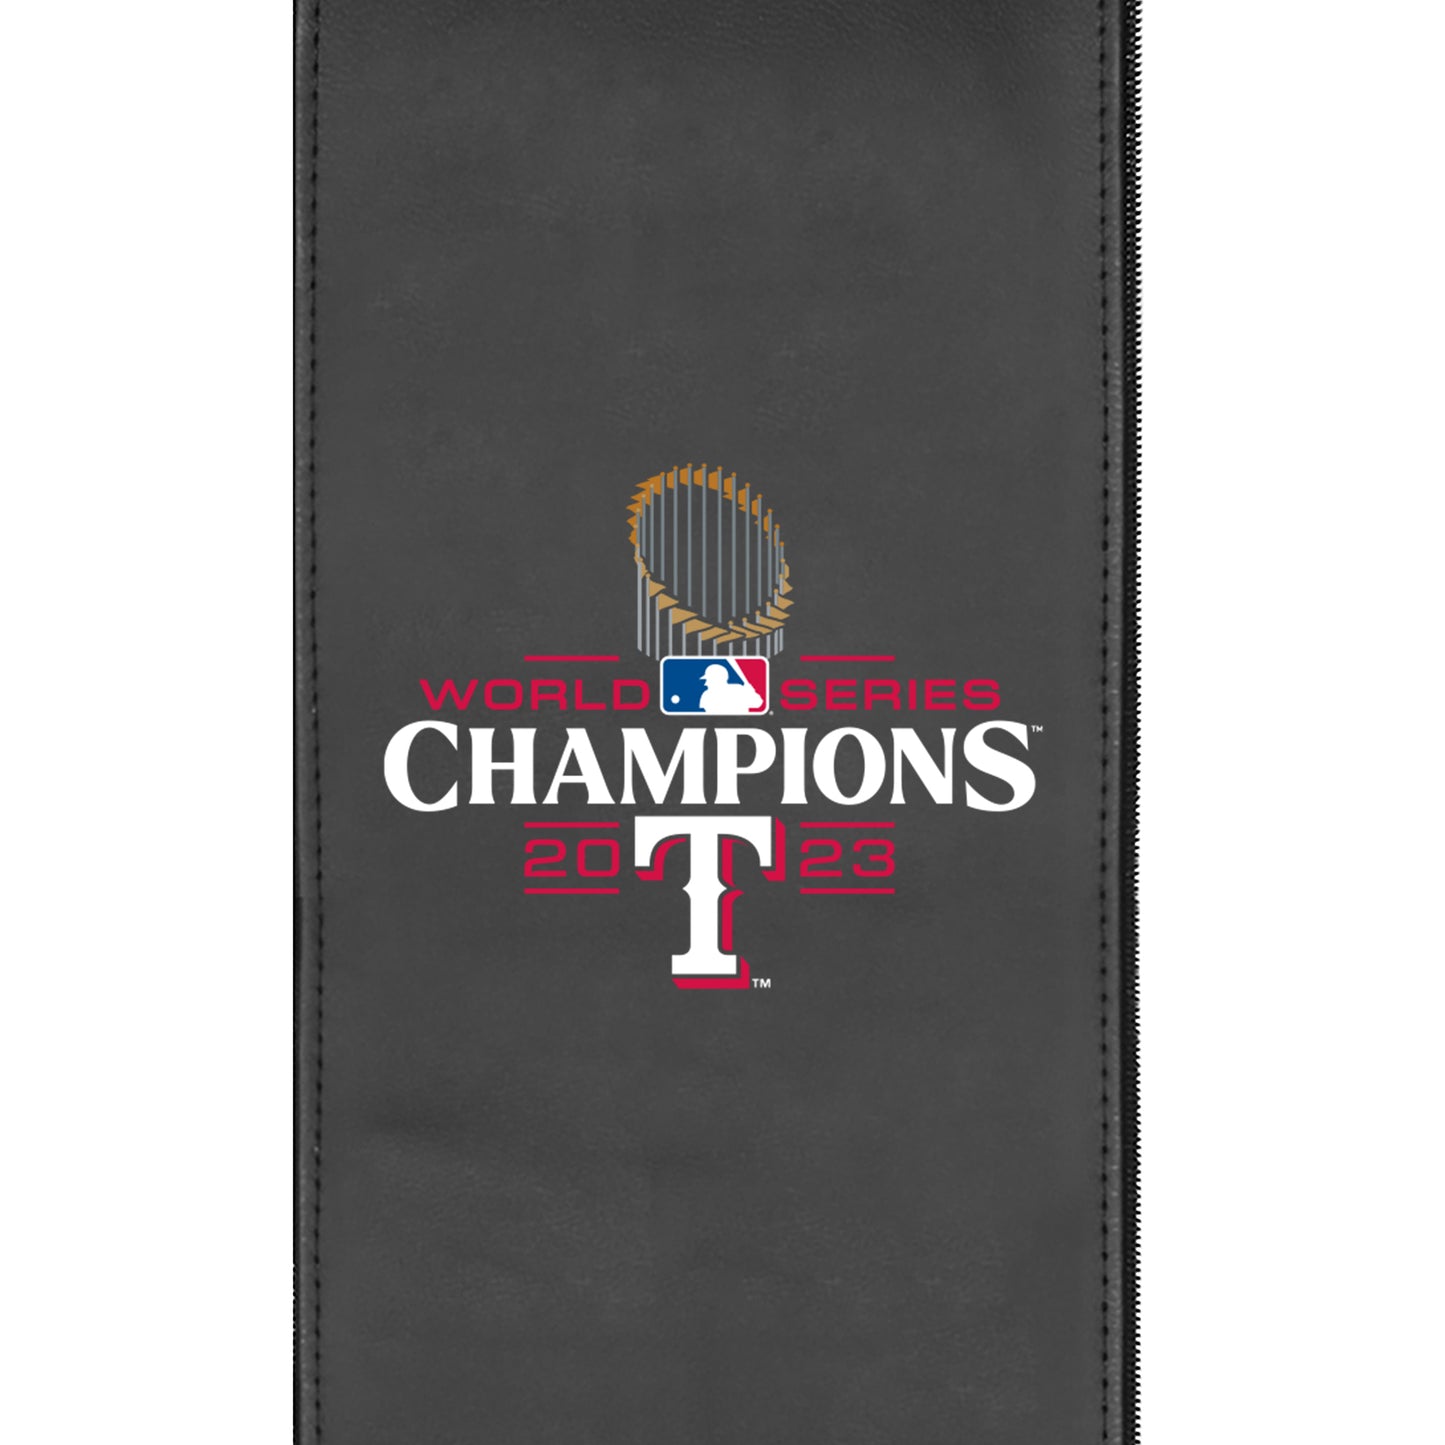 PhantomX Mesh Gaming Chair with Texas Rangers 2023 Champions Logo